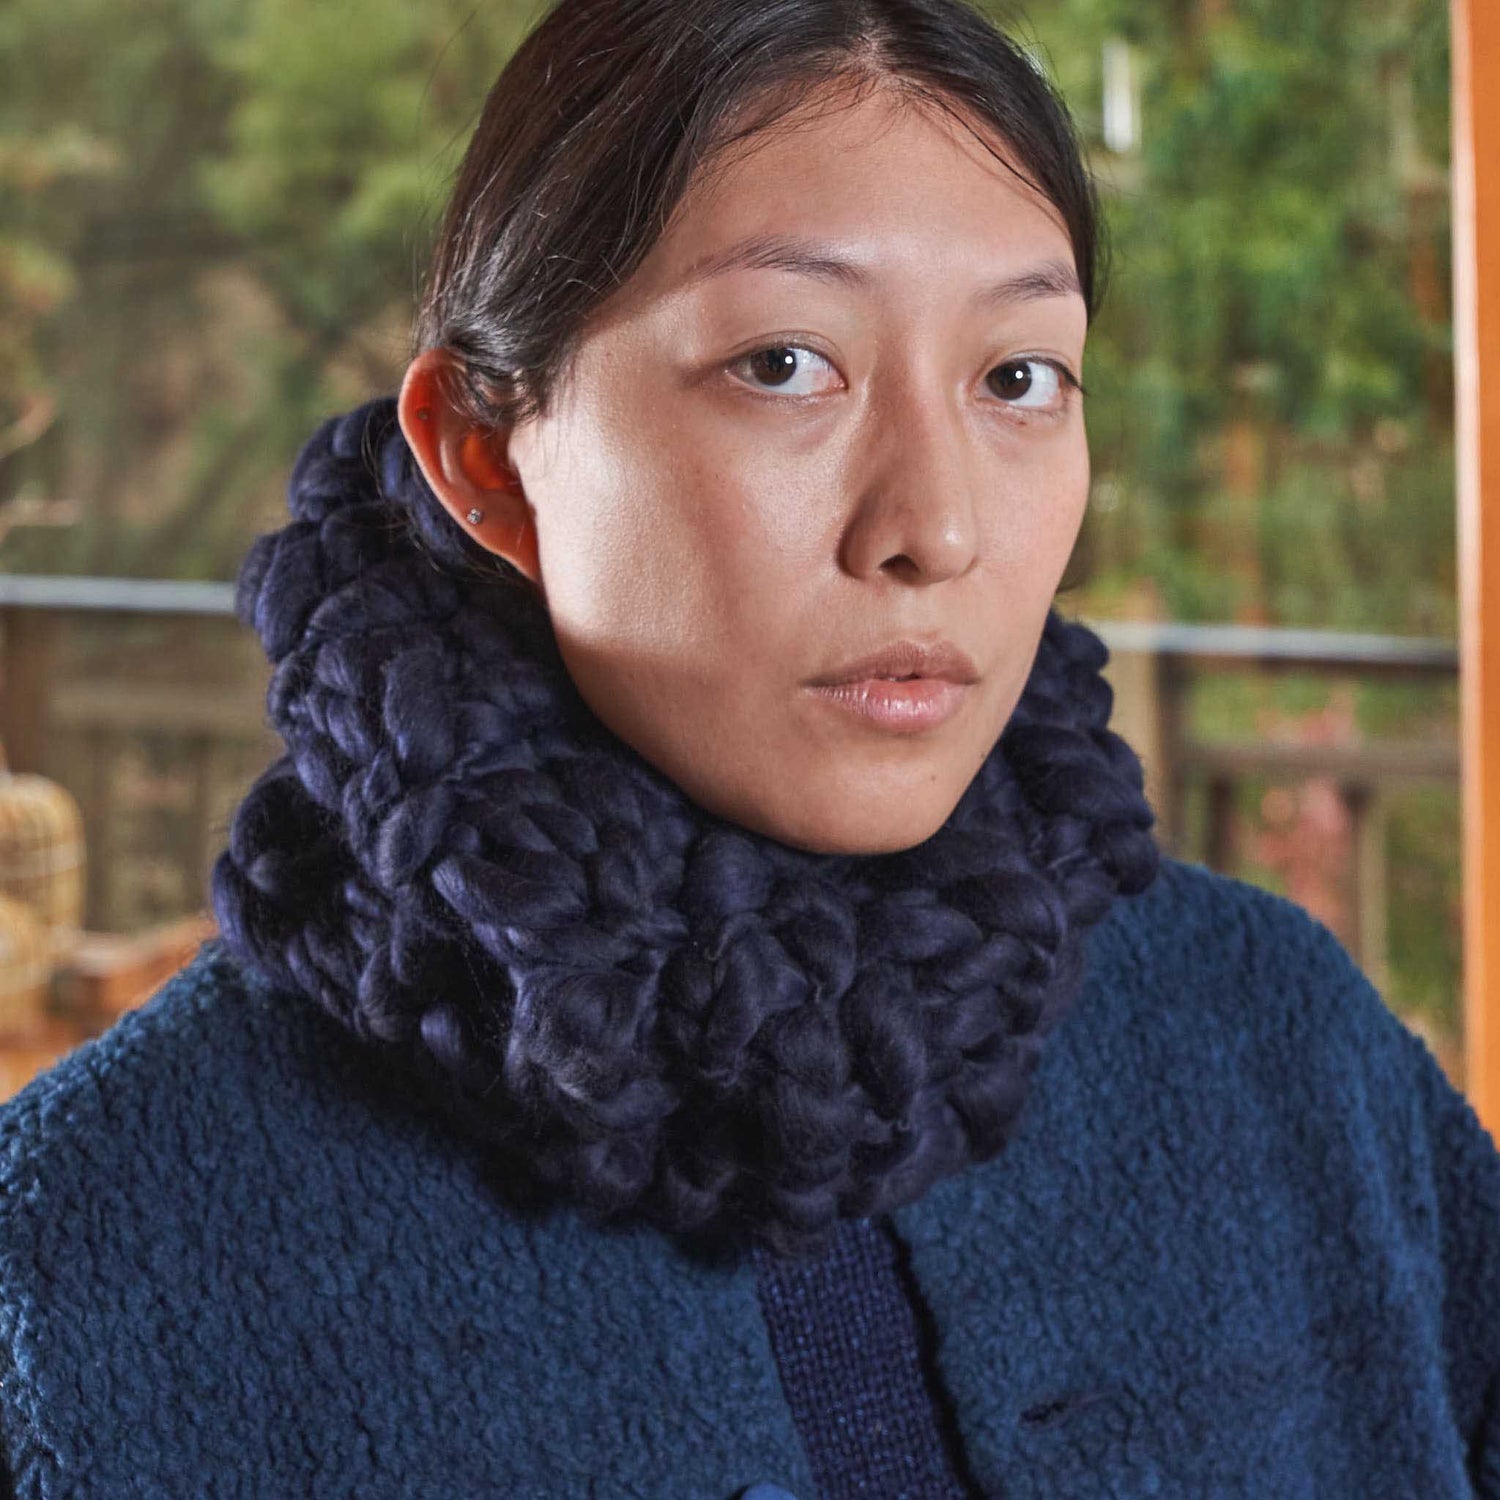 Chunky Hand-Knit Merino Wool Snood, Indigo